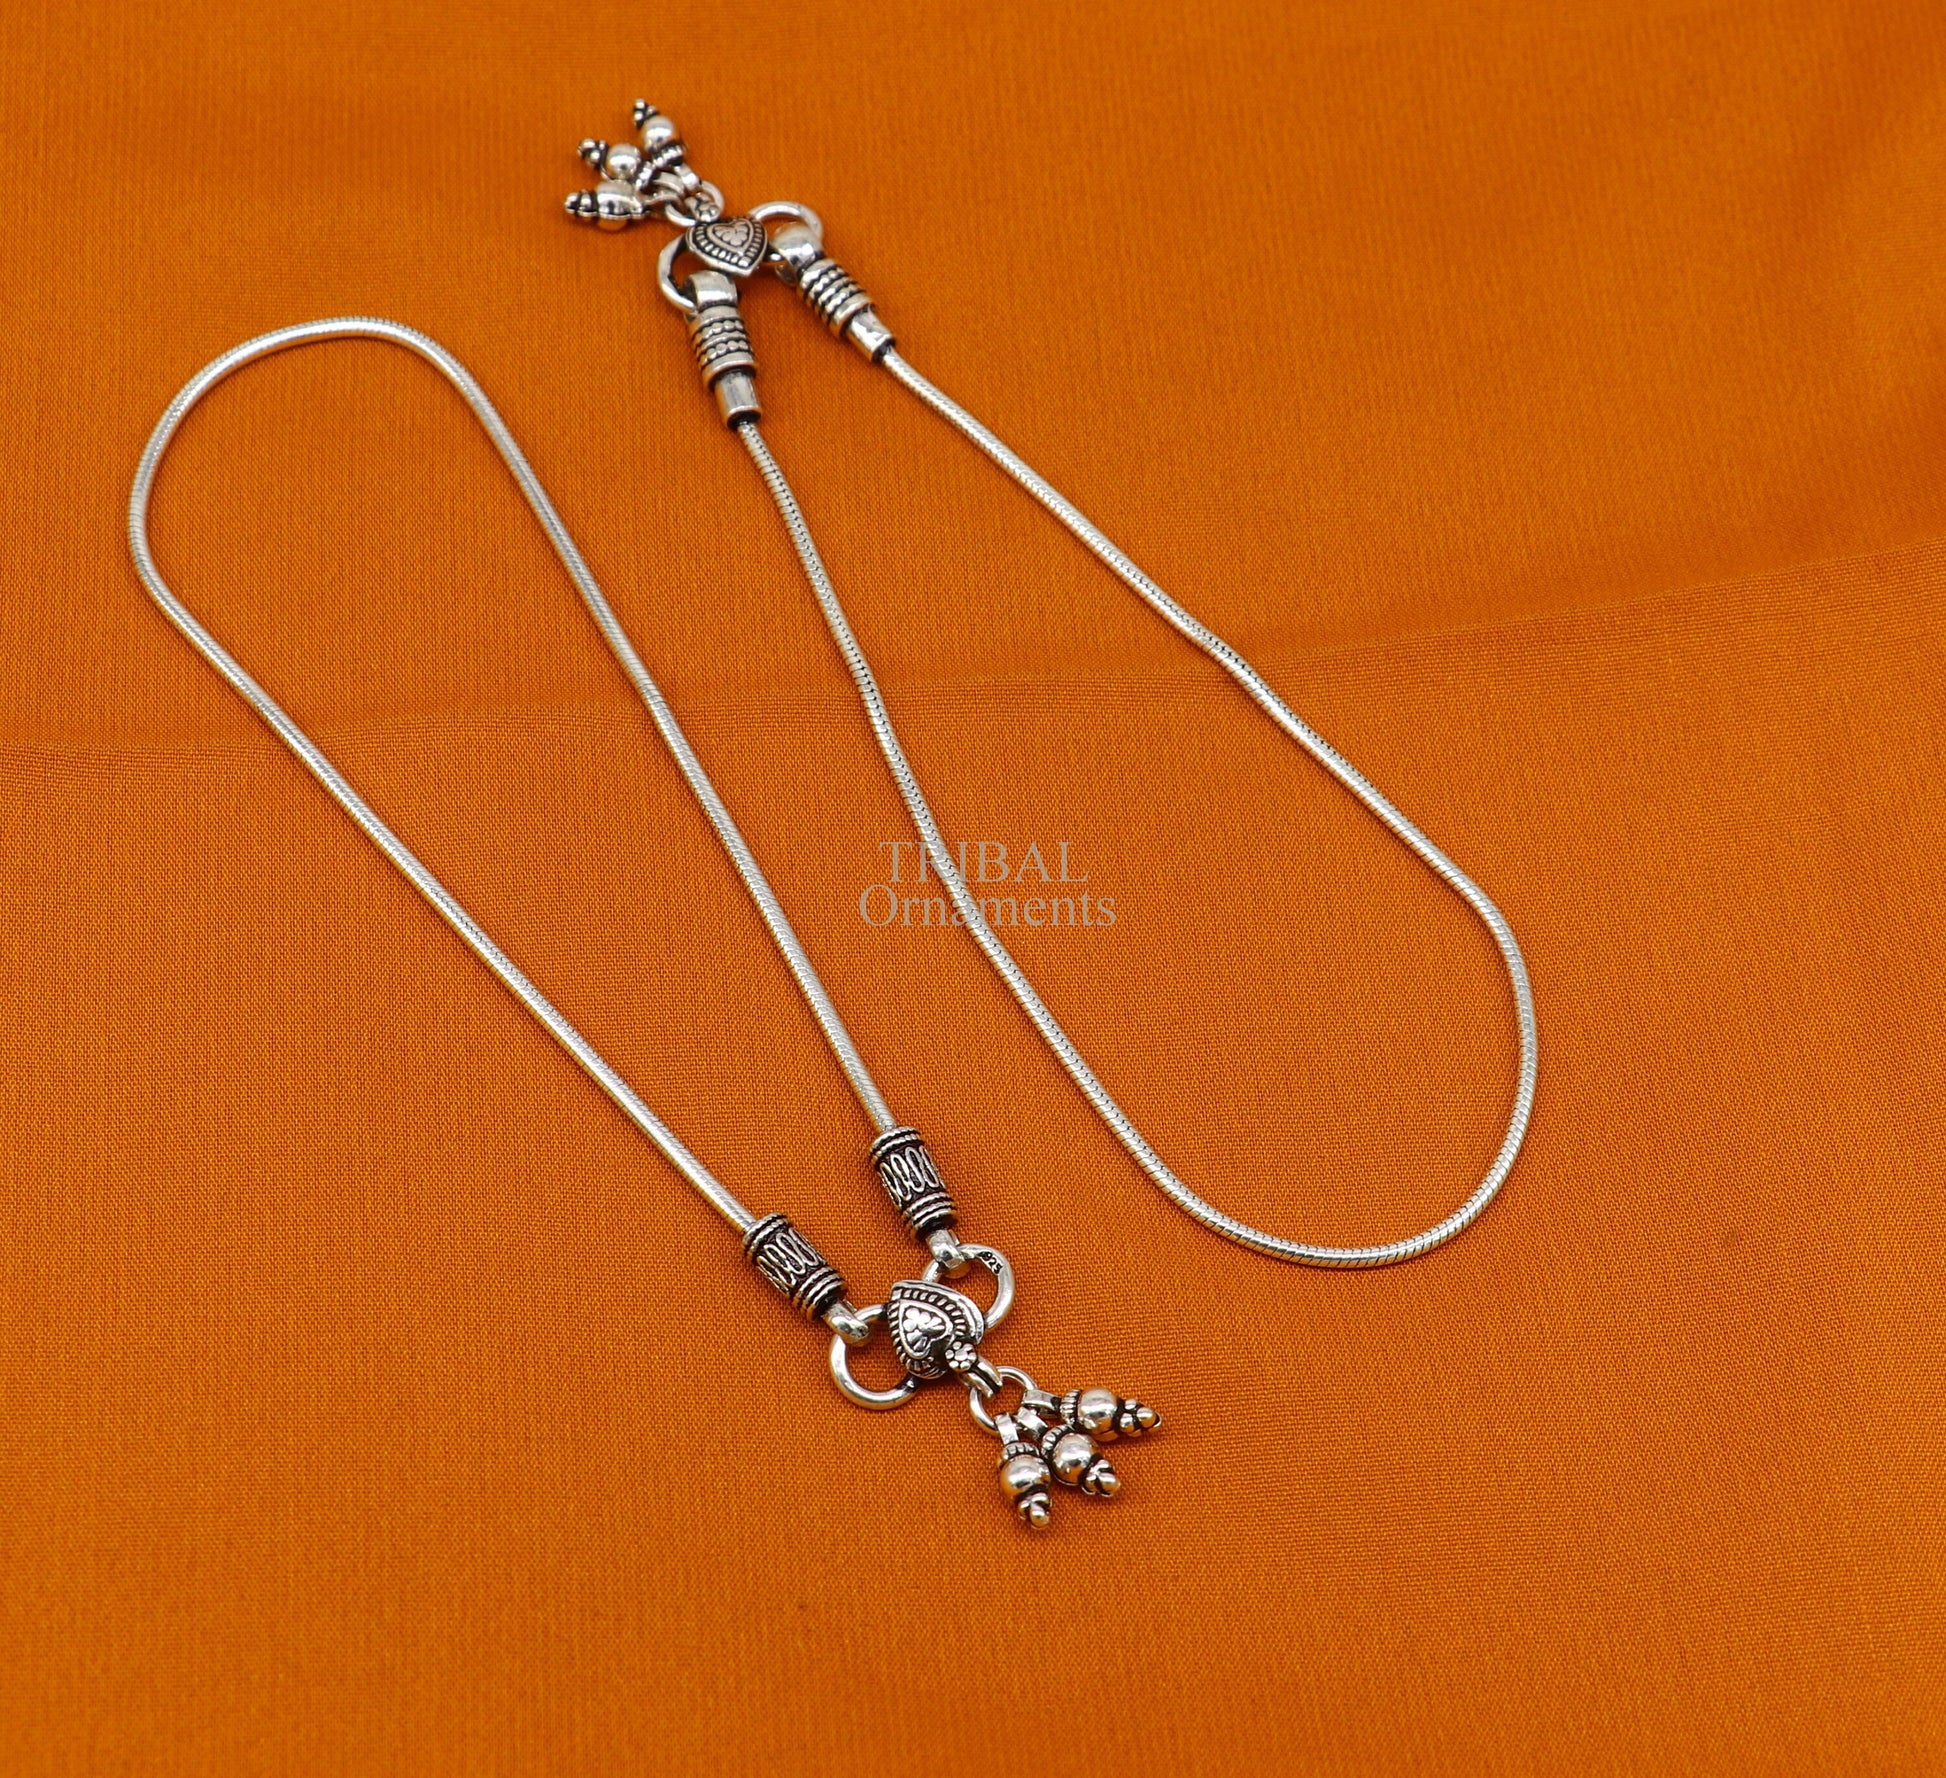 10.5"Handmade snake chain 925 sterling silver ankle bracelet, silver anklets, foot bracelet amazing belly dance jewelry gift her nank460 - TRIBAL ORNAMENTS